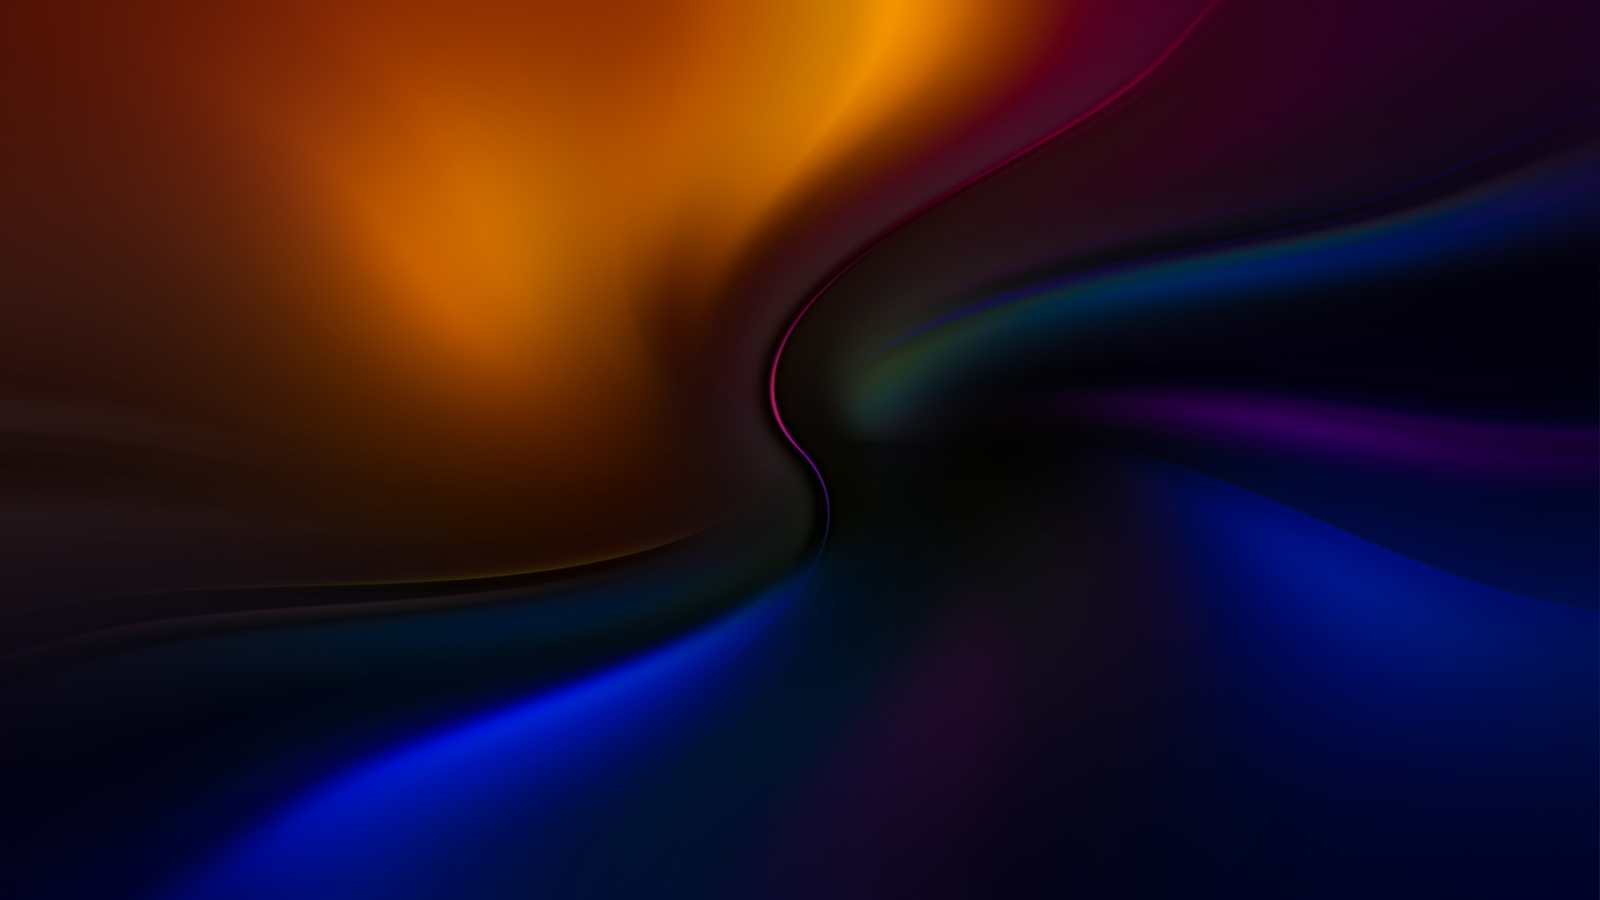 fade-glow-abstract-8k-18.jpg